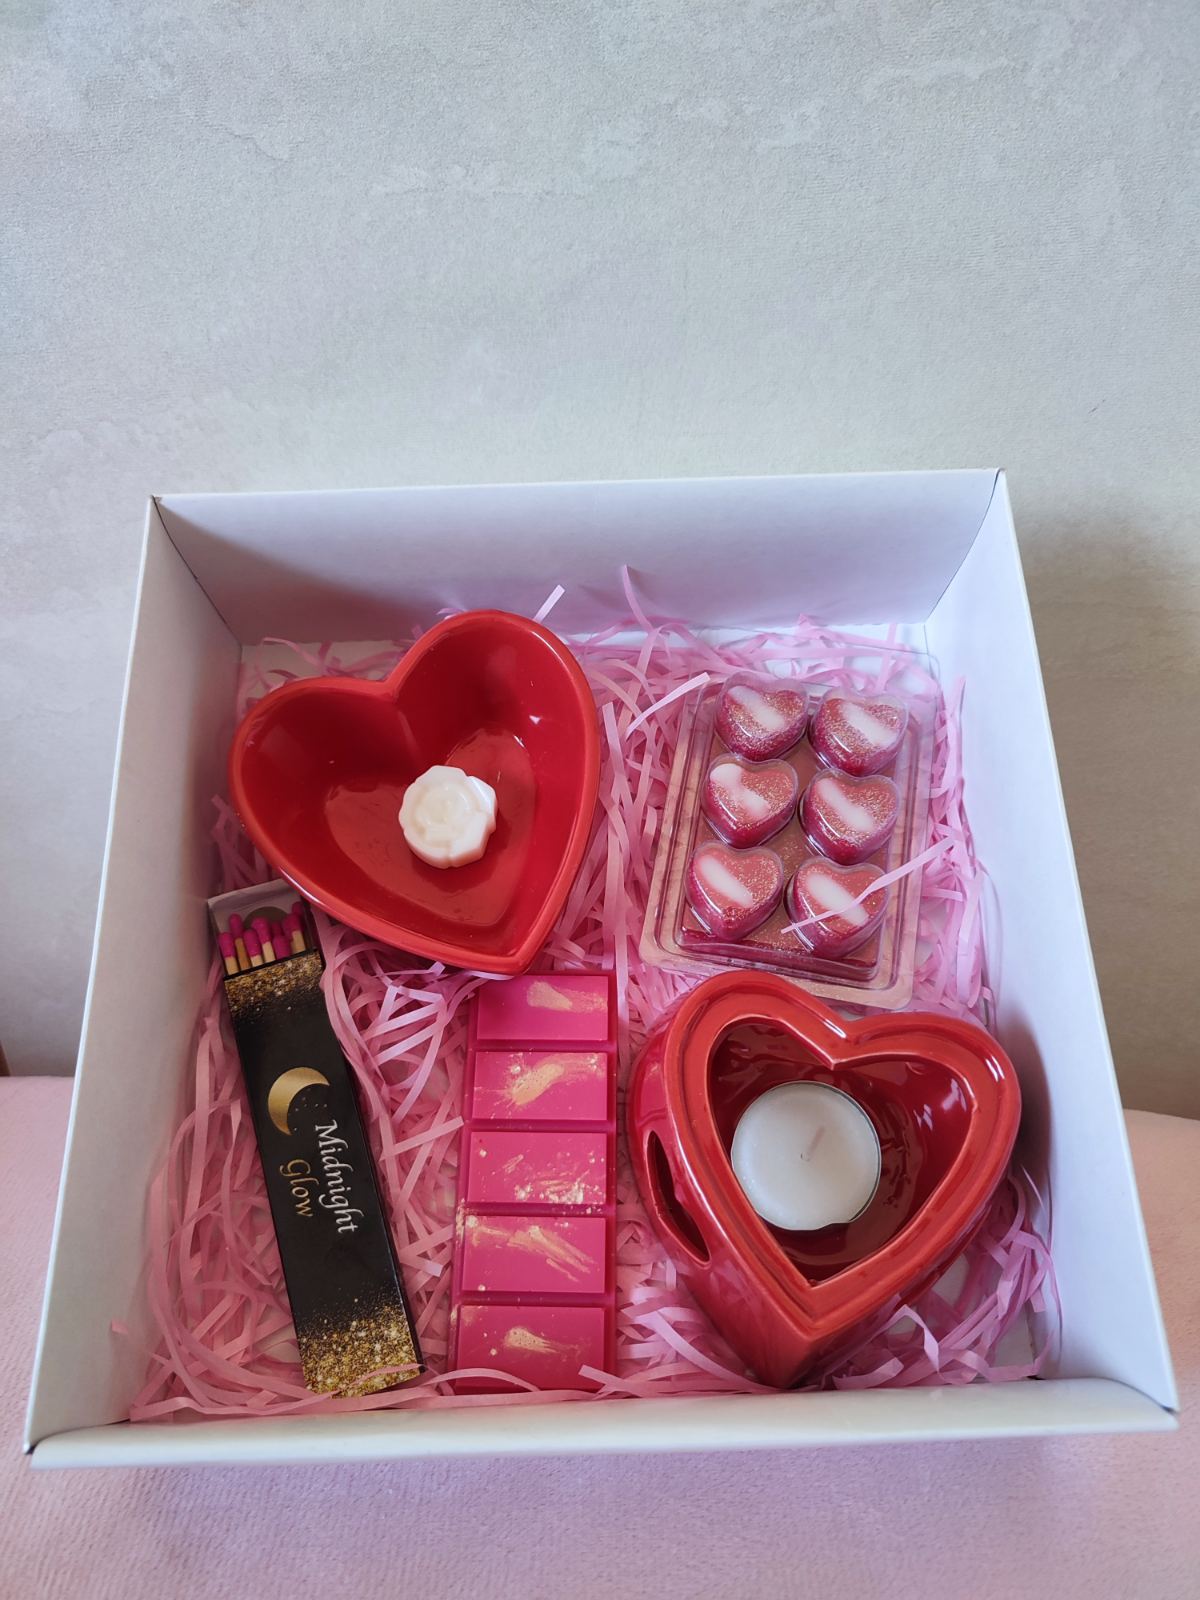 Heart Gift Box - Valentine's Day